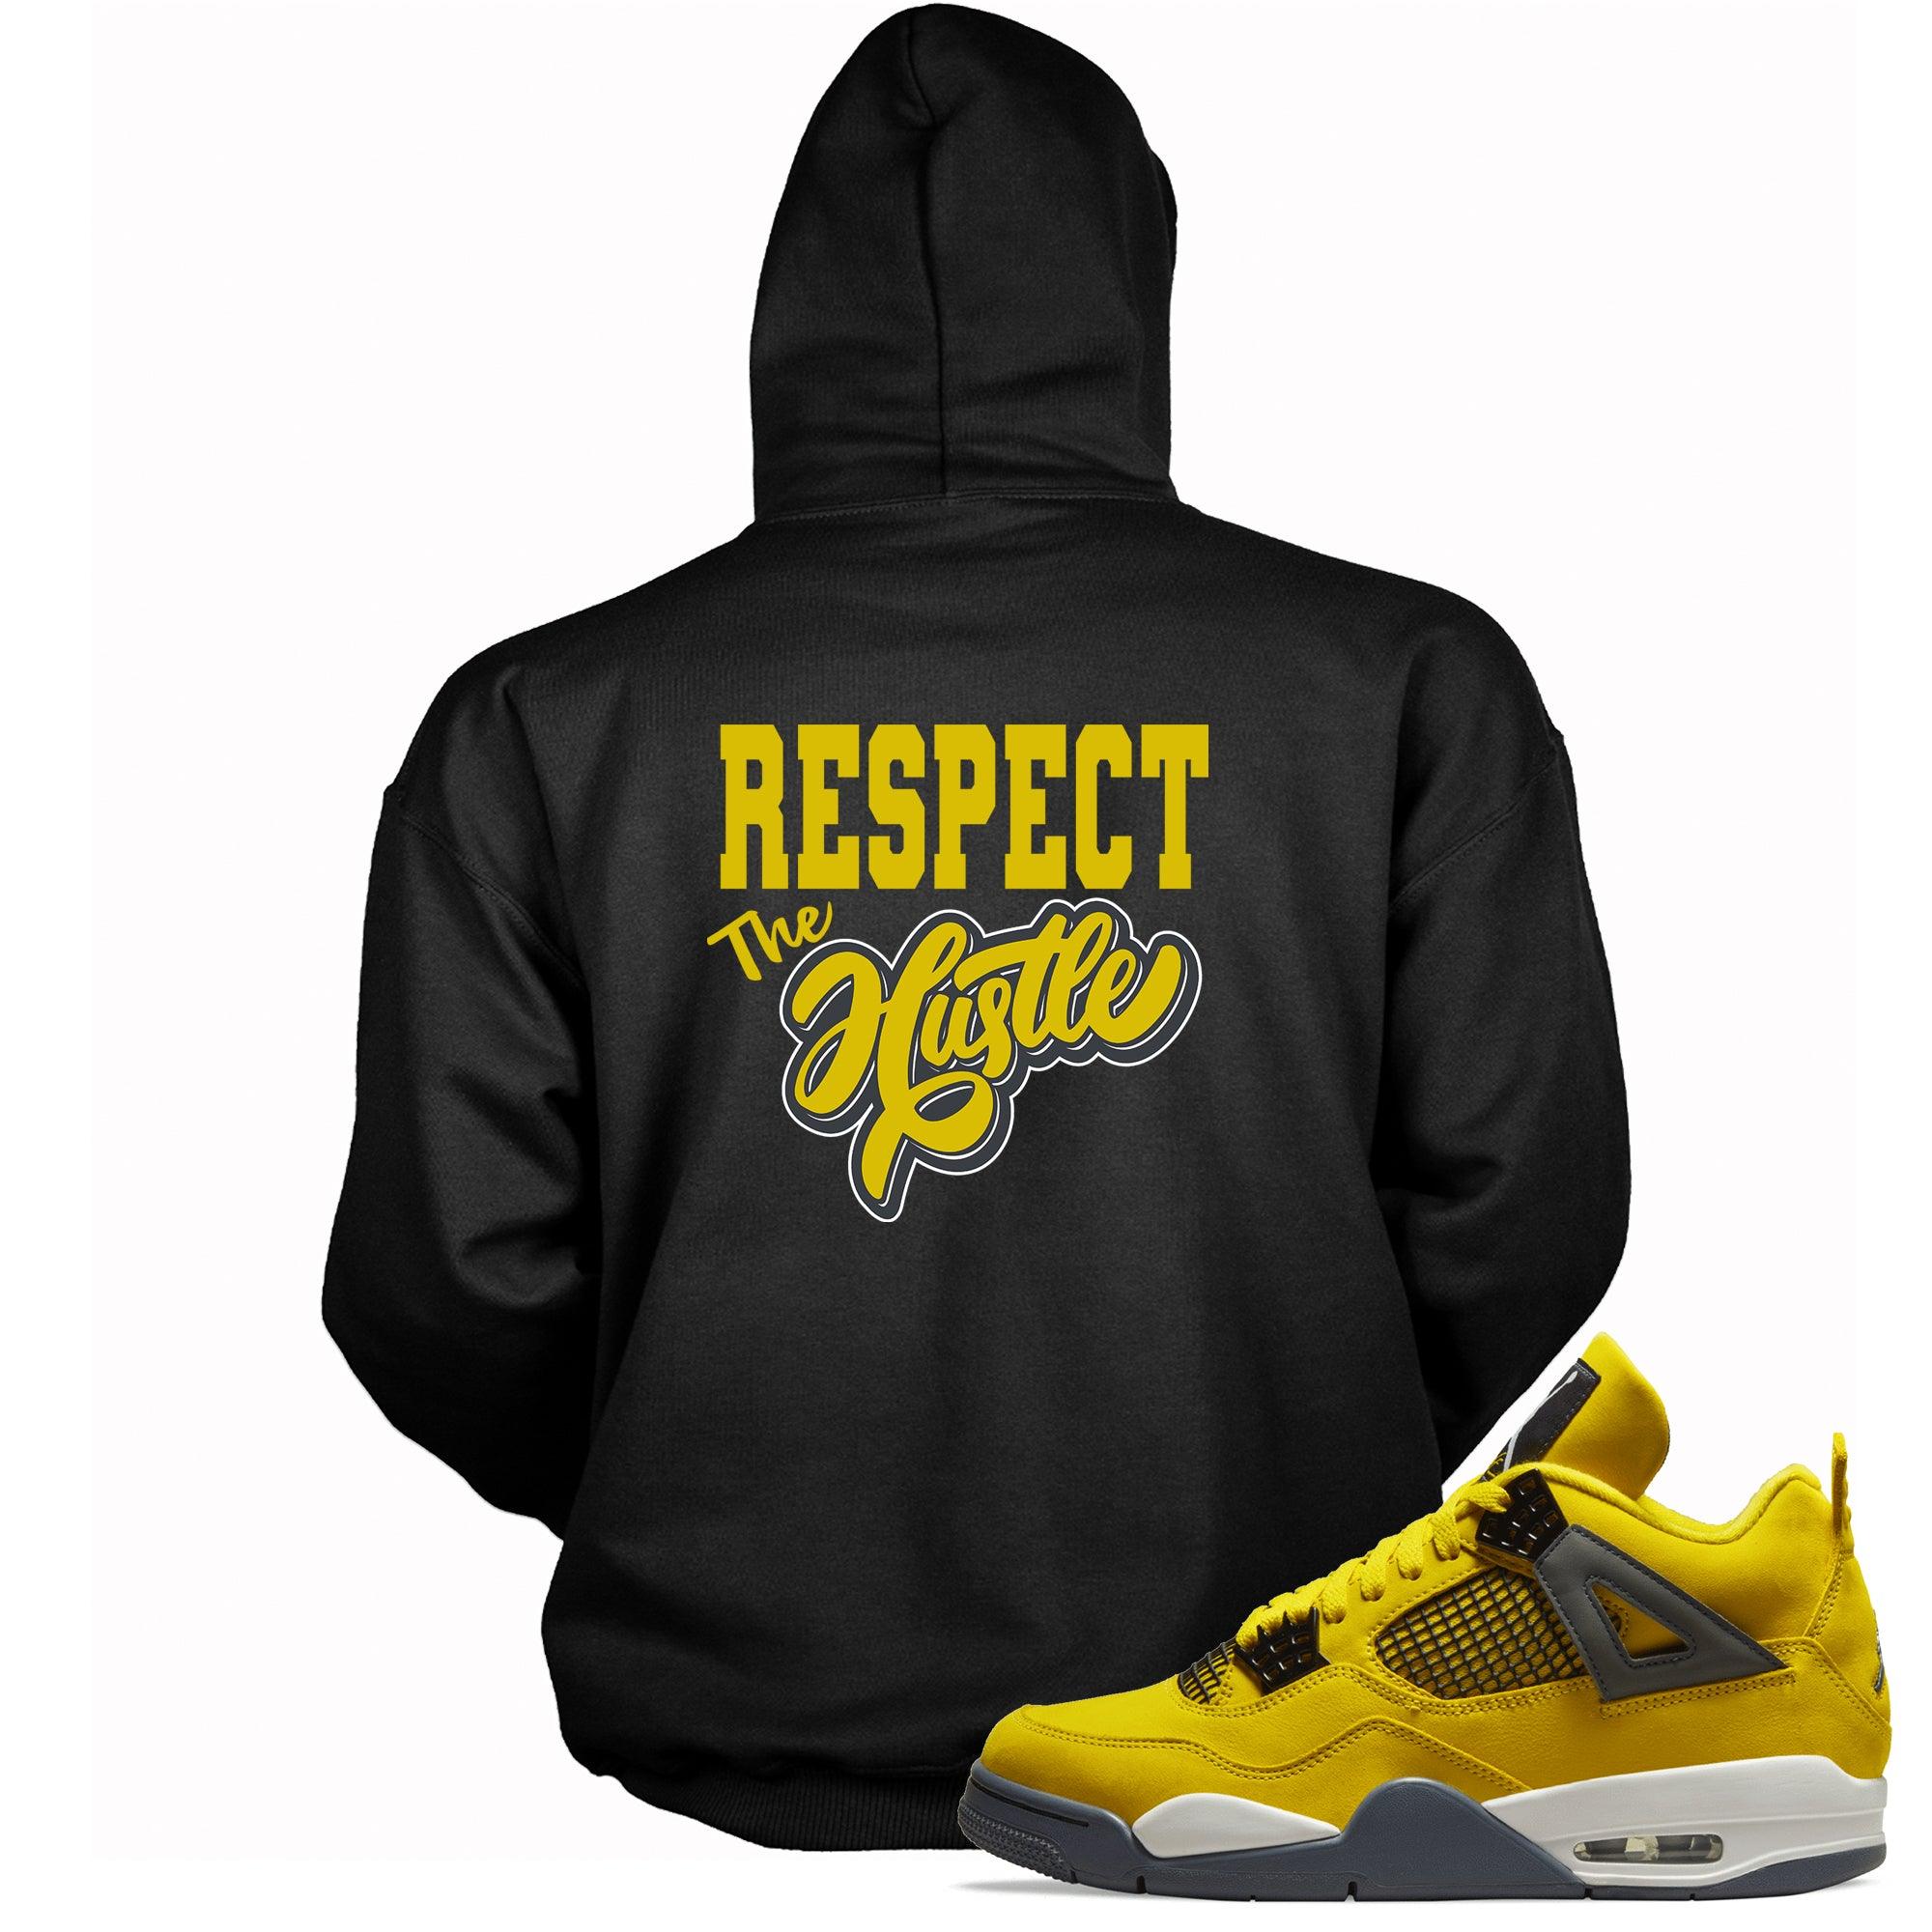 Black Respect The Hustle Hoodie Jordan 4s Retro Lightning photo